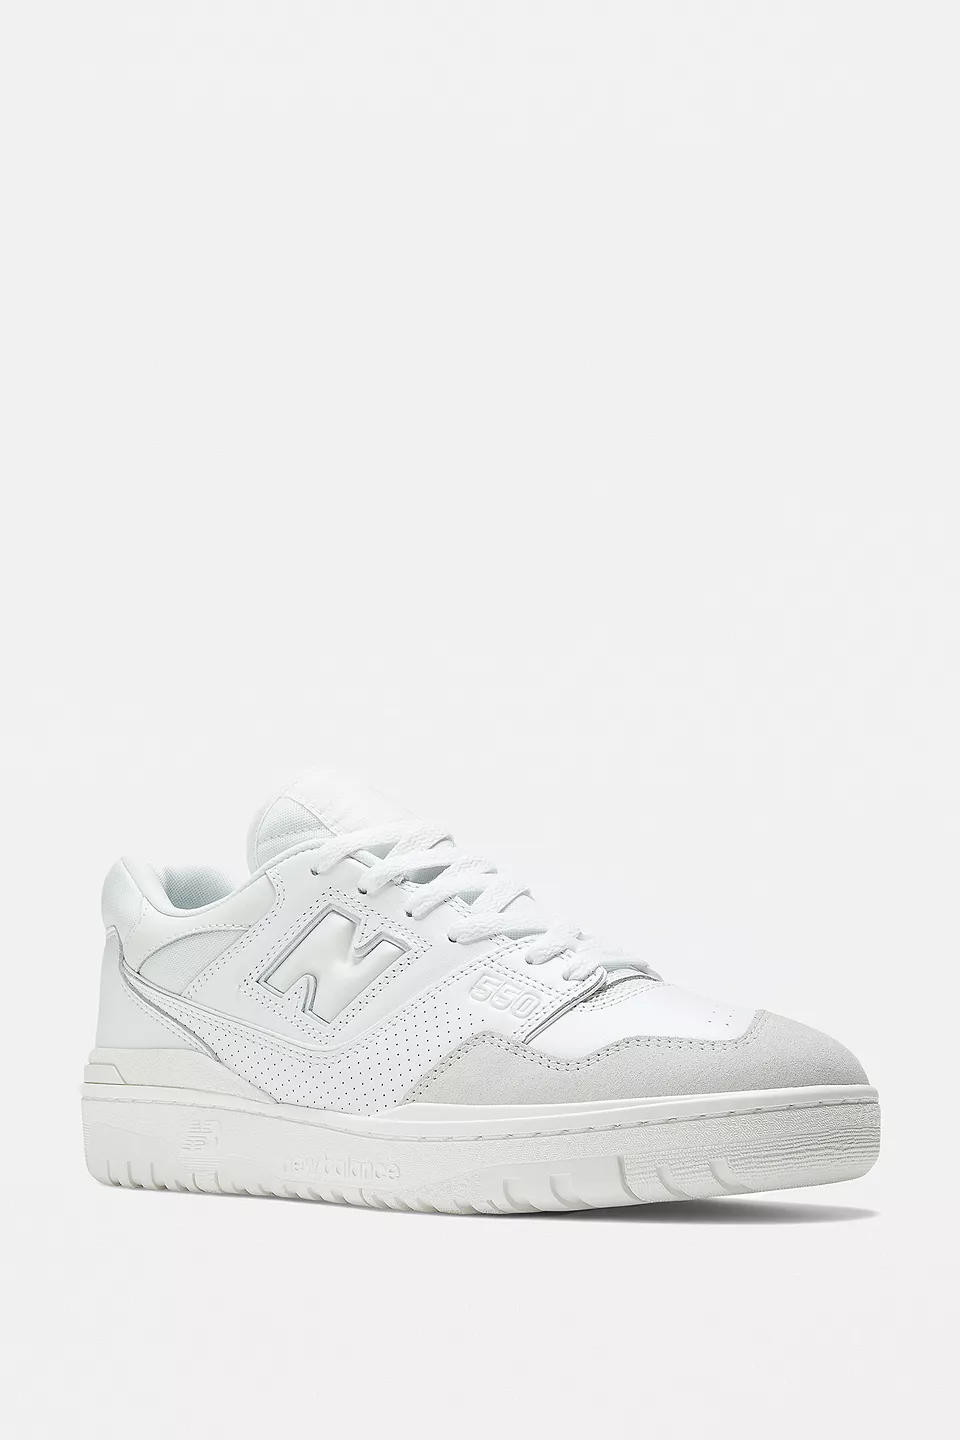 urbanoutfitters.com | New Balance – Sneaker „550‟ in Weiß und Grau